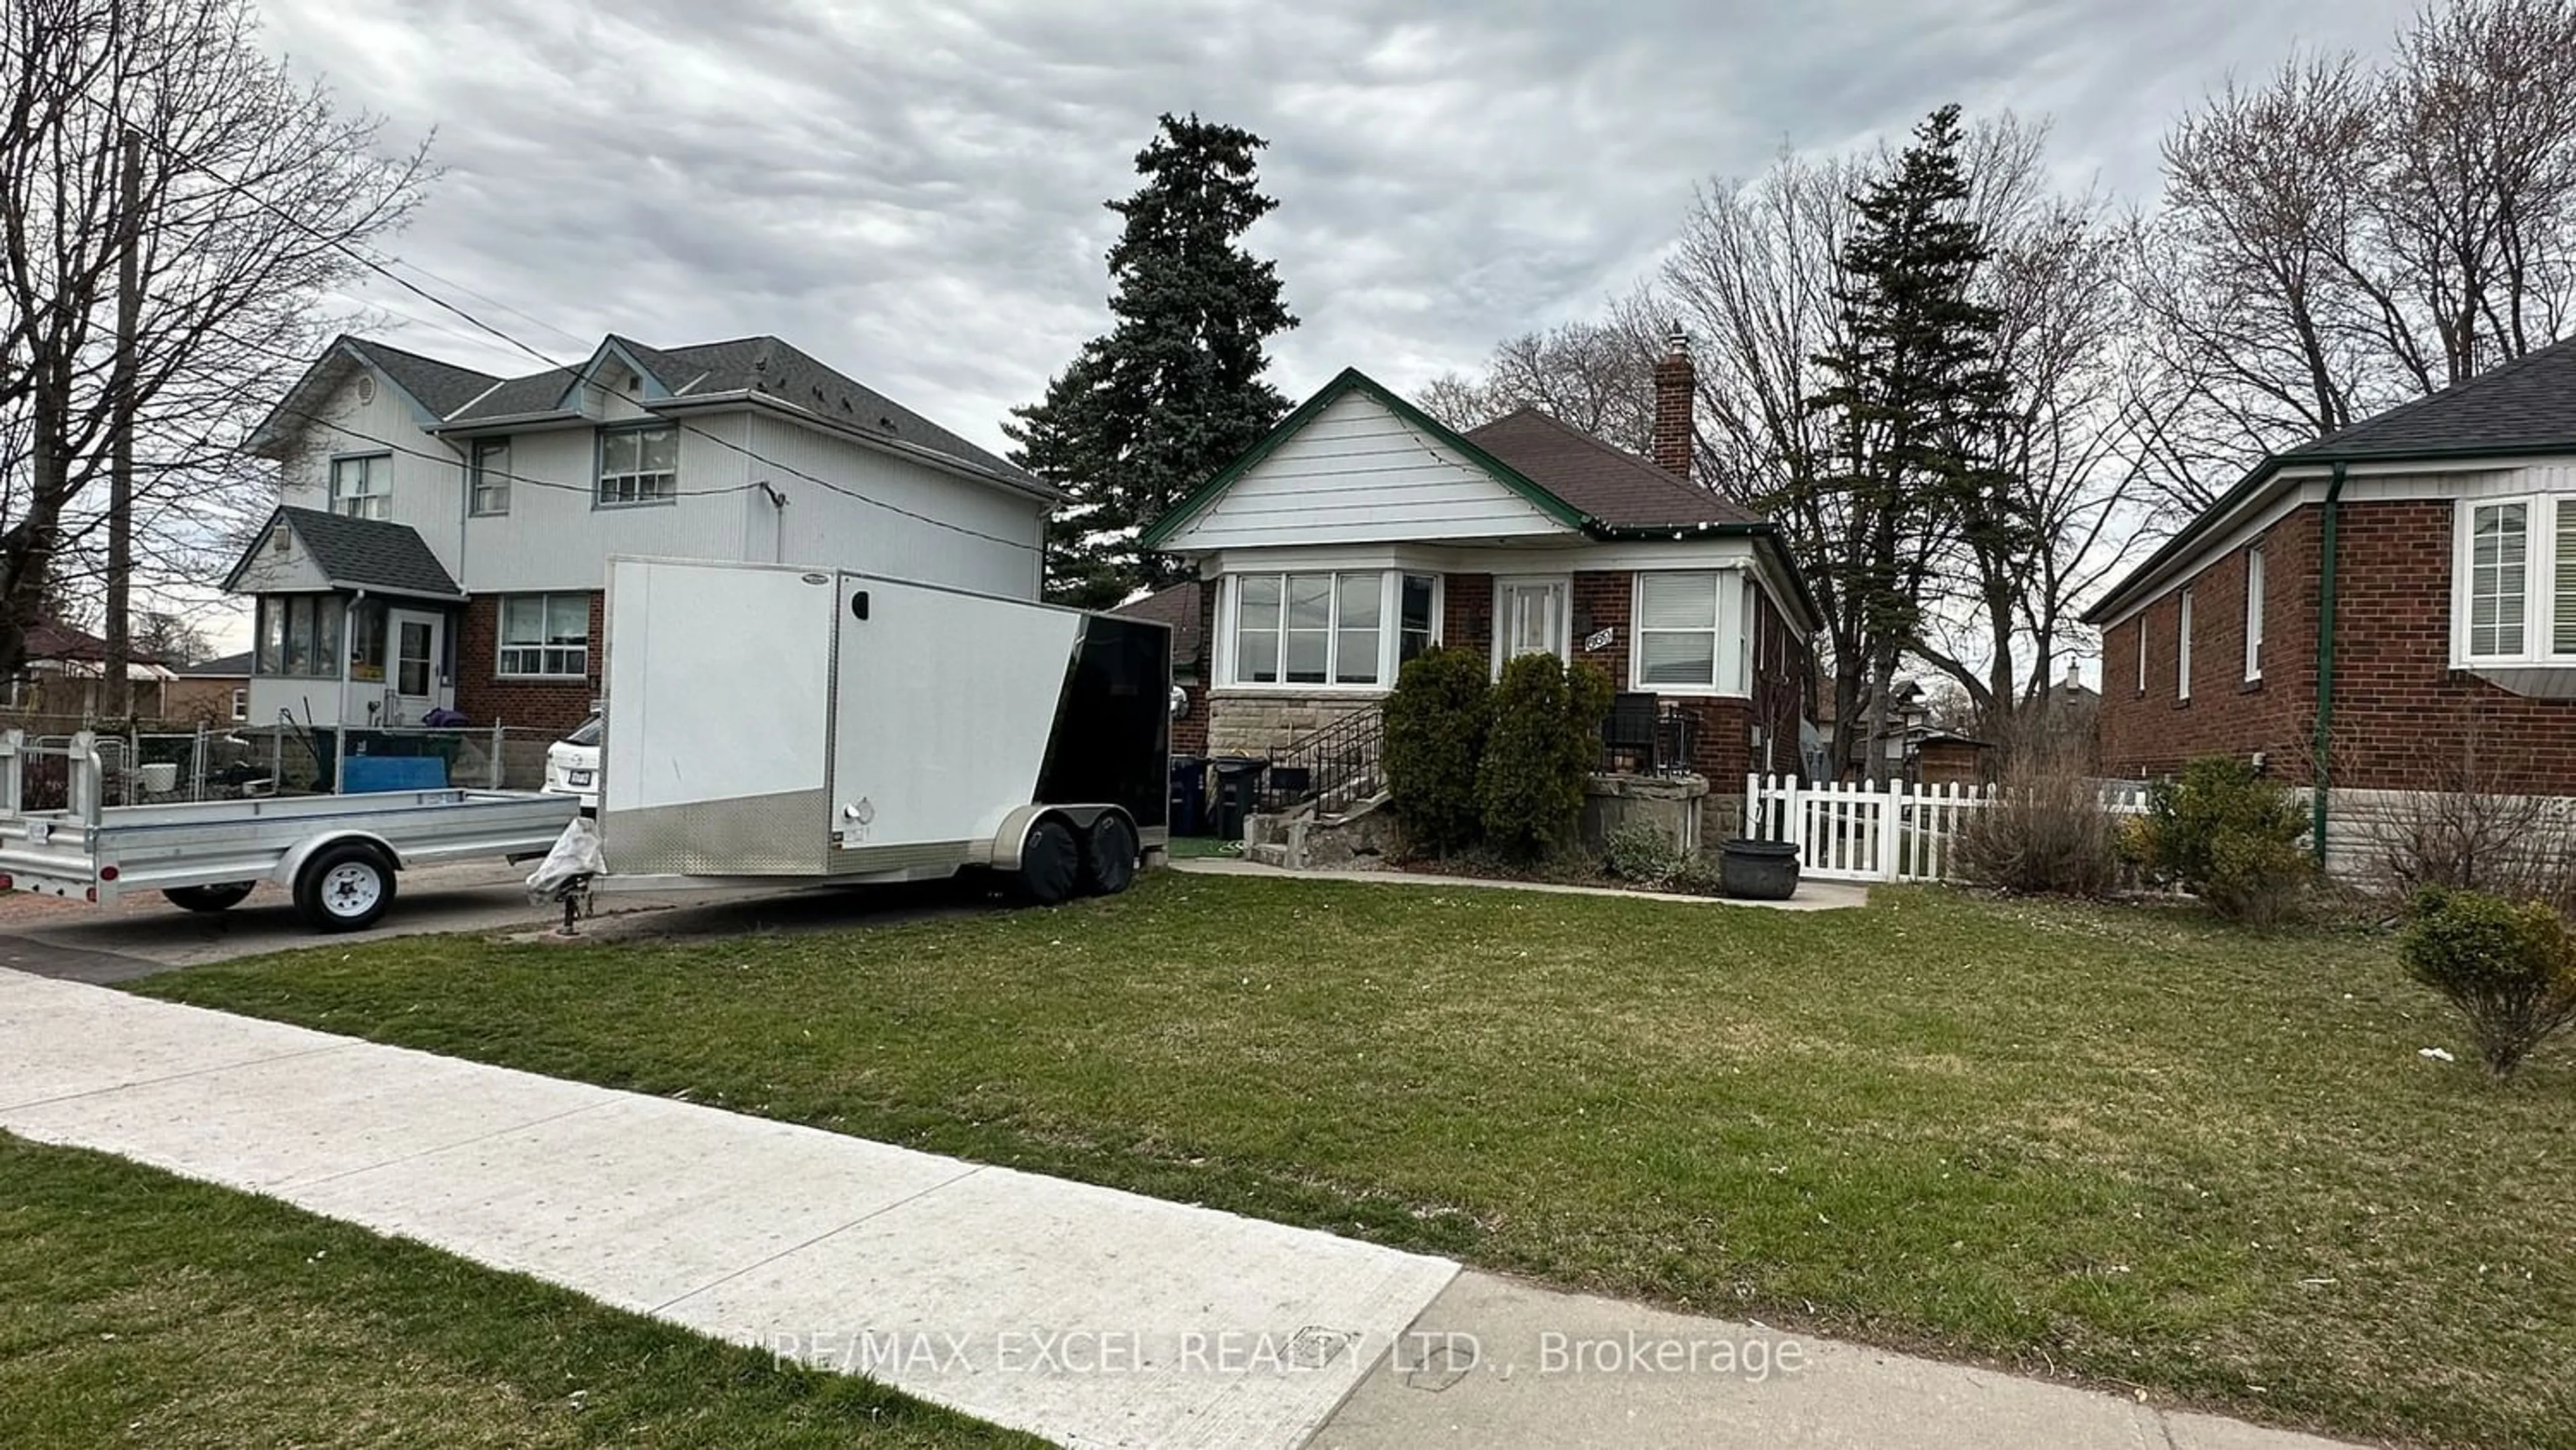 Frontside or backside of a home for 669 Kipling Ave, Toronto Ontario M8Z 5G2